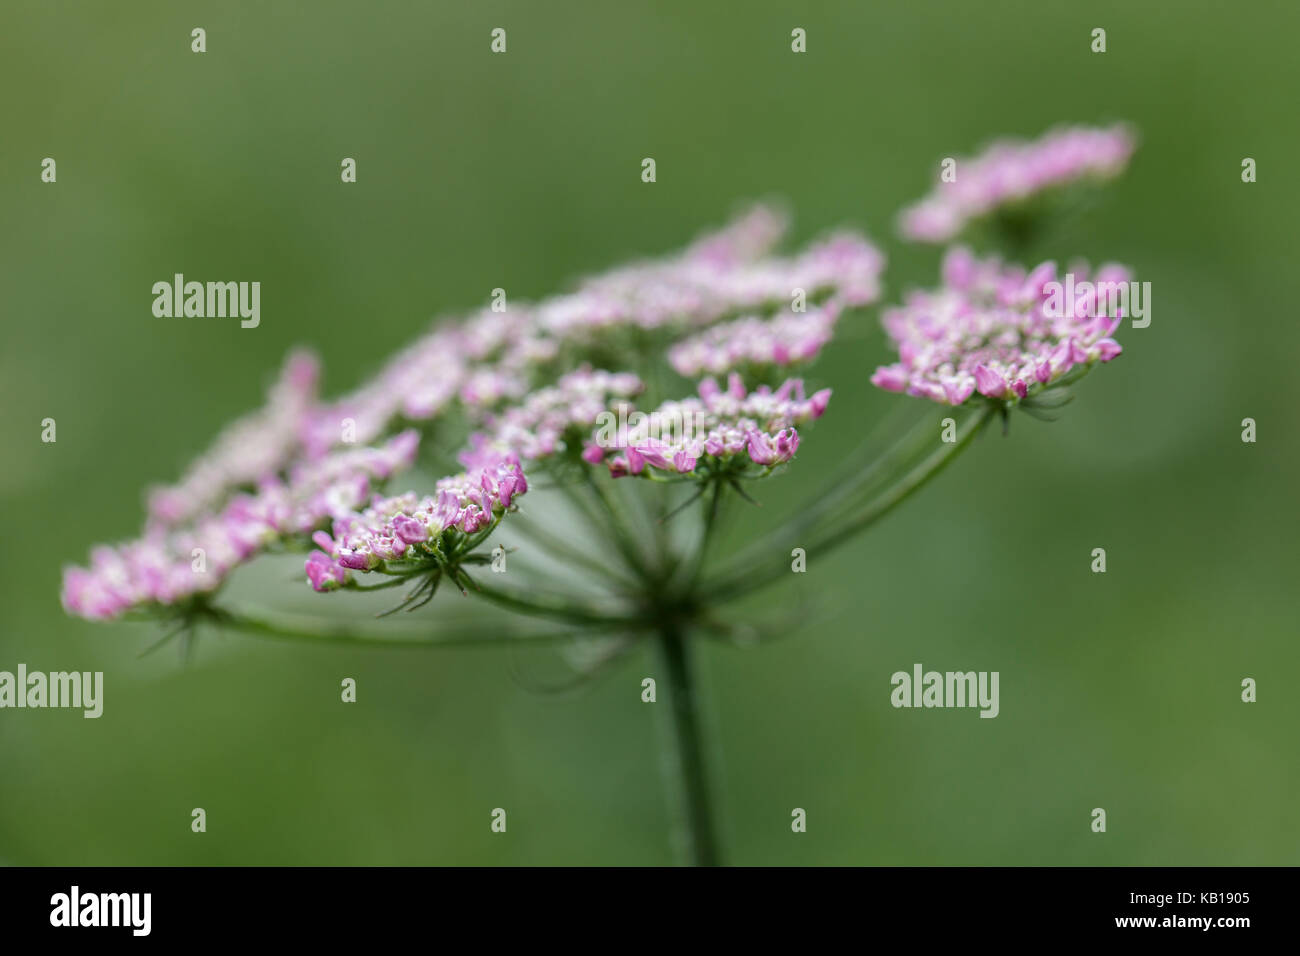 Close up of hogweed (Heracleum sphodylium) head against simple green background Stock Photo